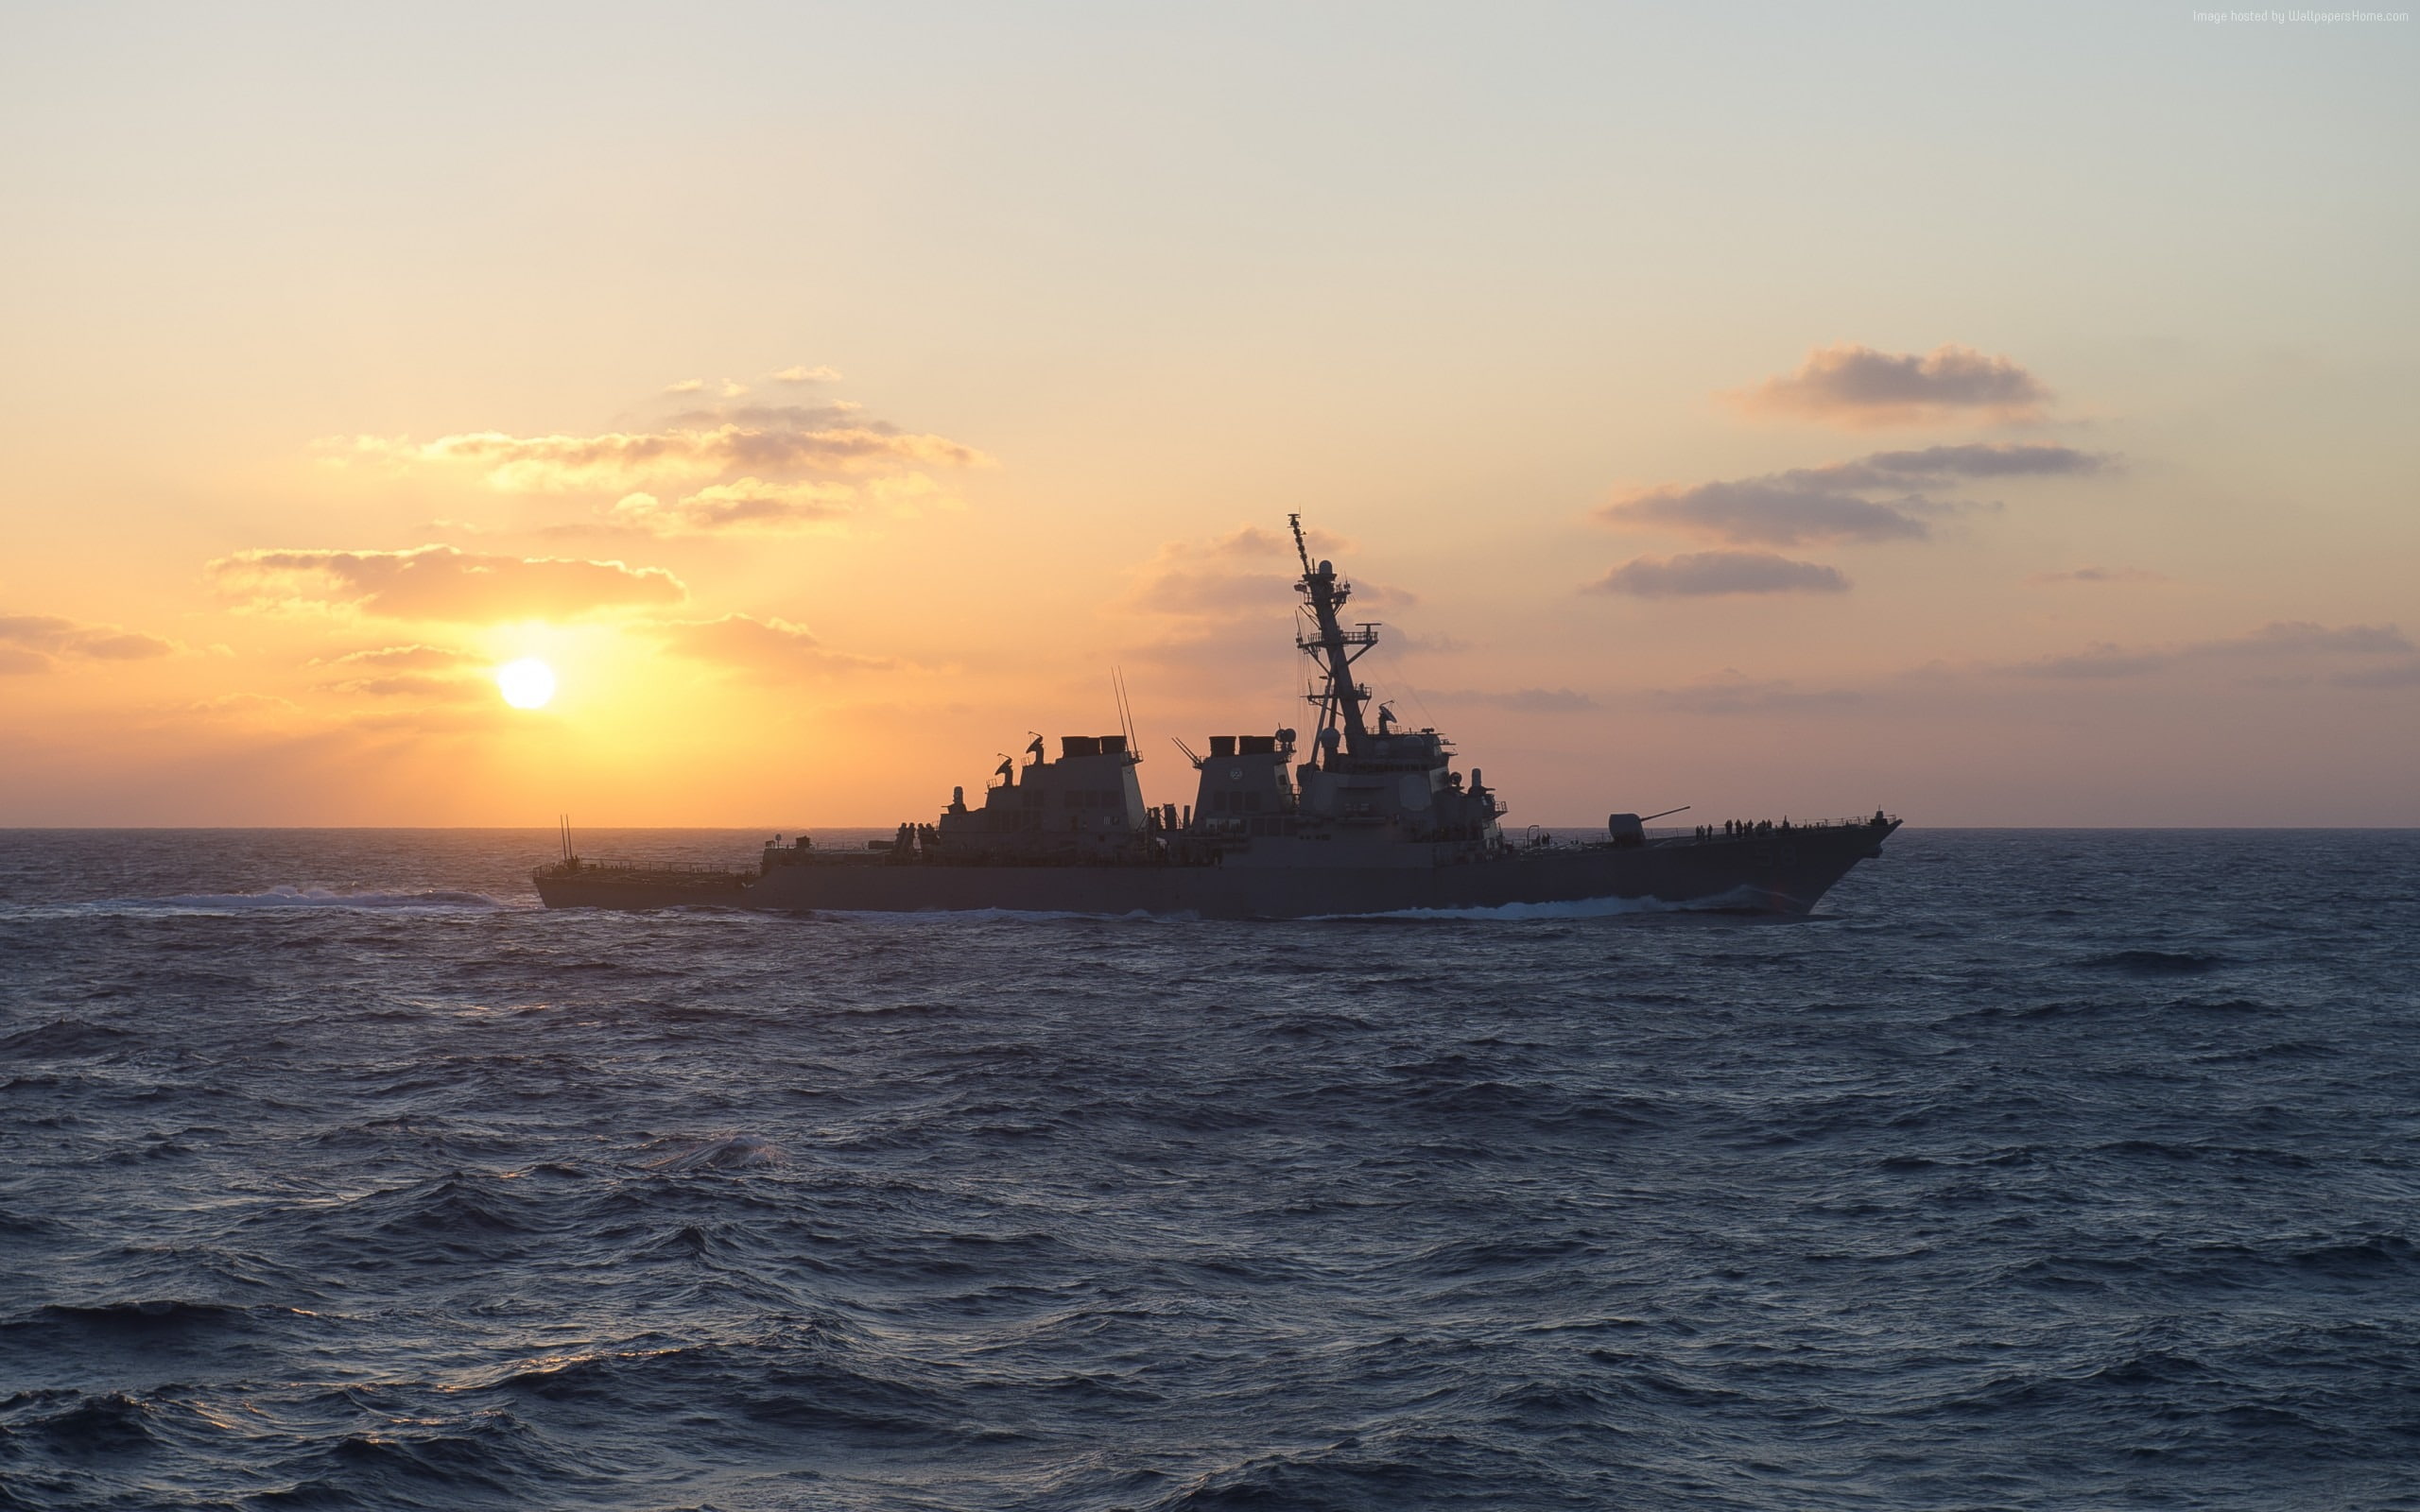 Arleigh burke class destroyer us navy-Military Ves.., gray battleship